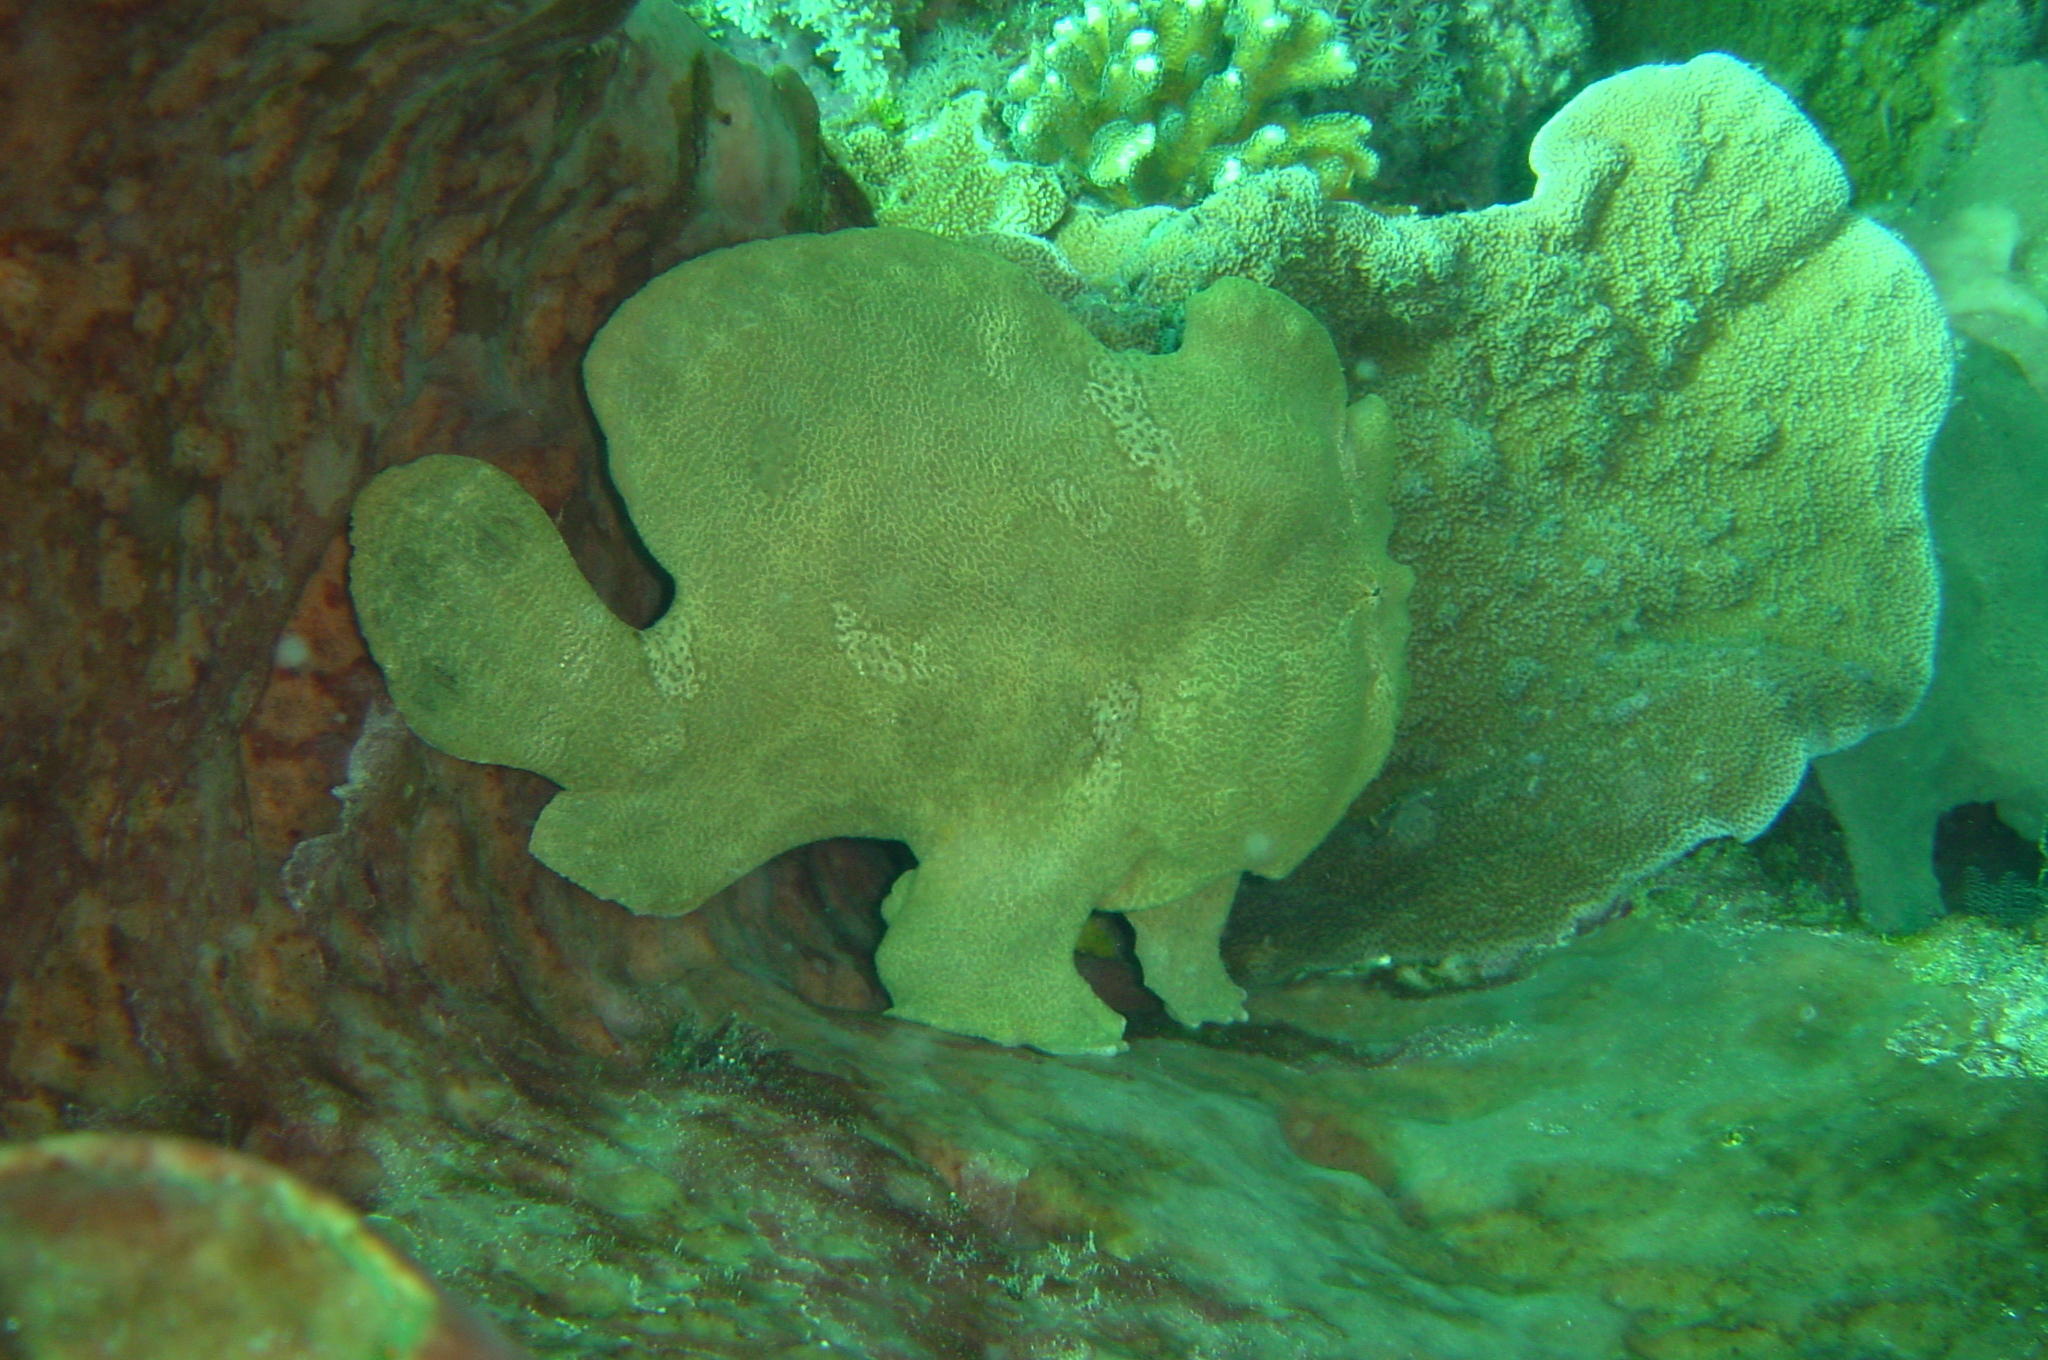 giant frogfish in sponge